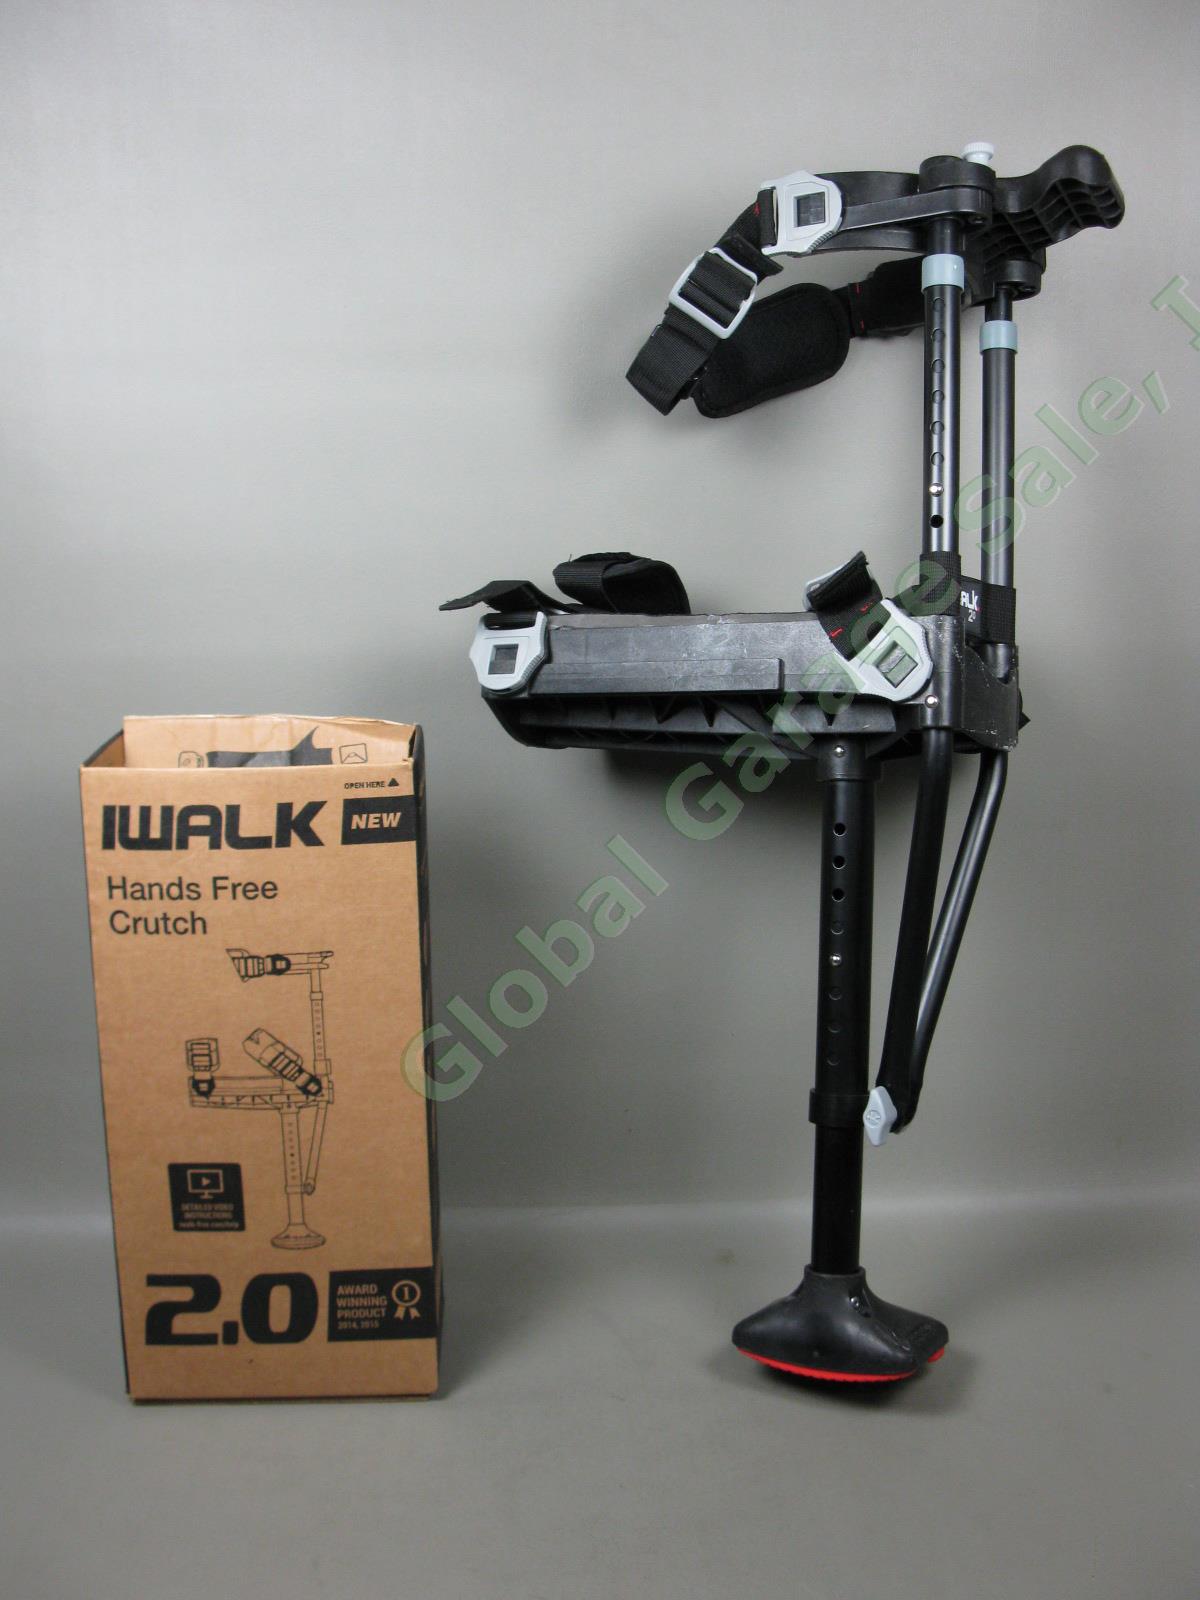 iWalk 2.0 Hands Free Adjustable Pirate Peg Leg Support Knee Crutch Walker W/ Box